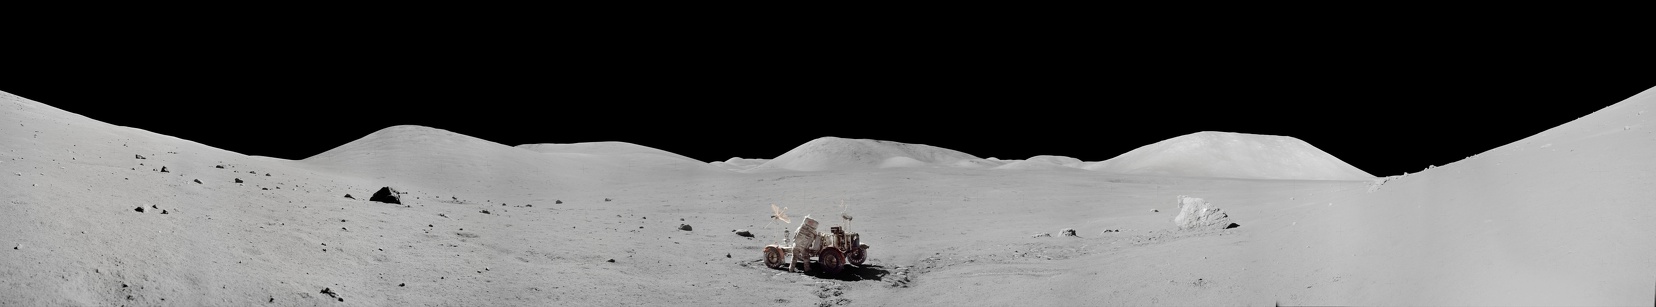 Panorama Apolo 17